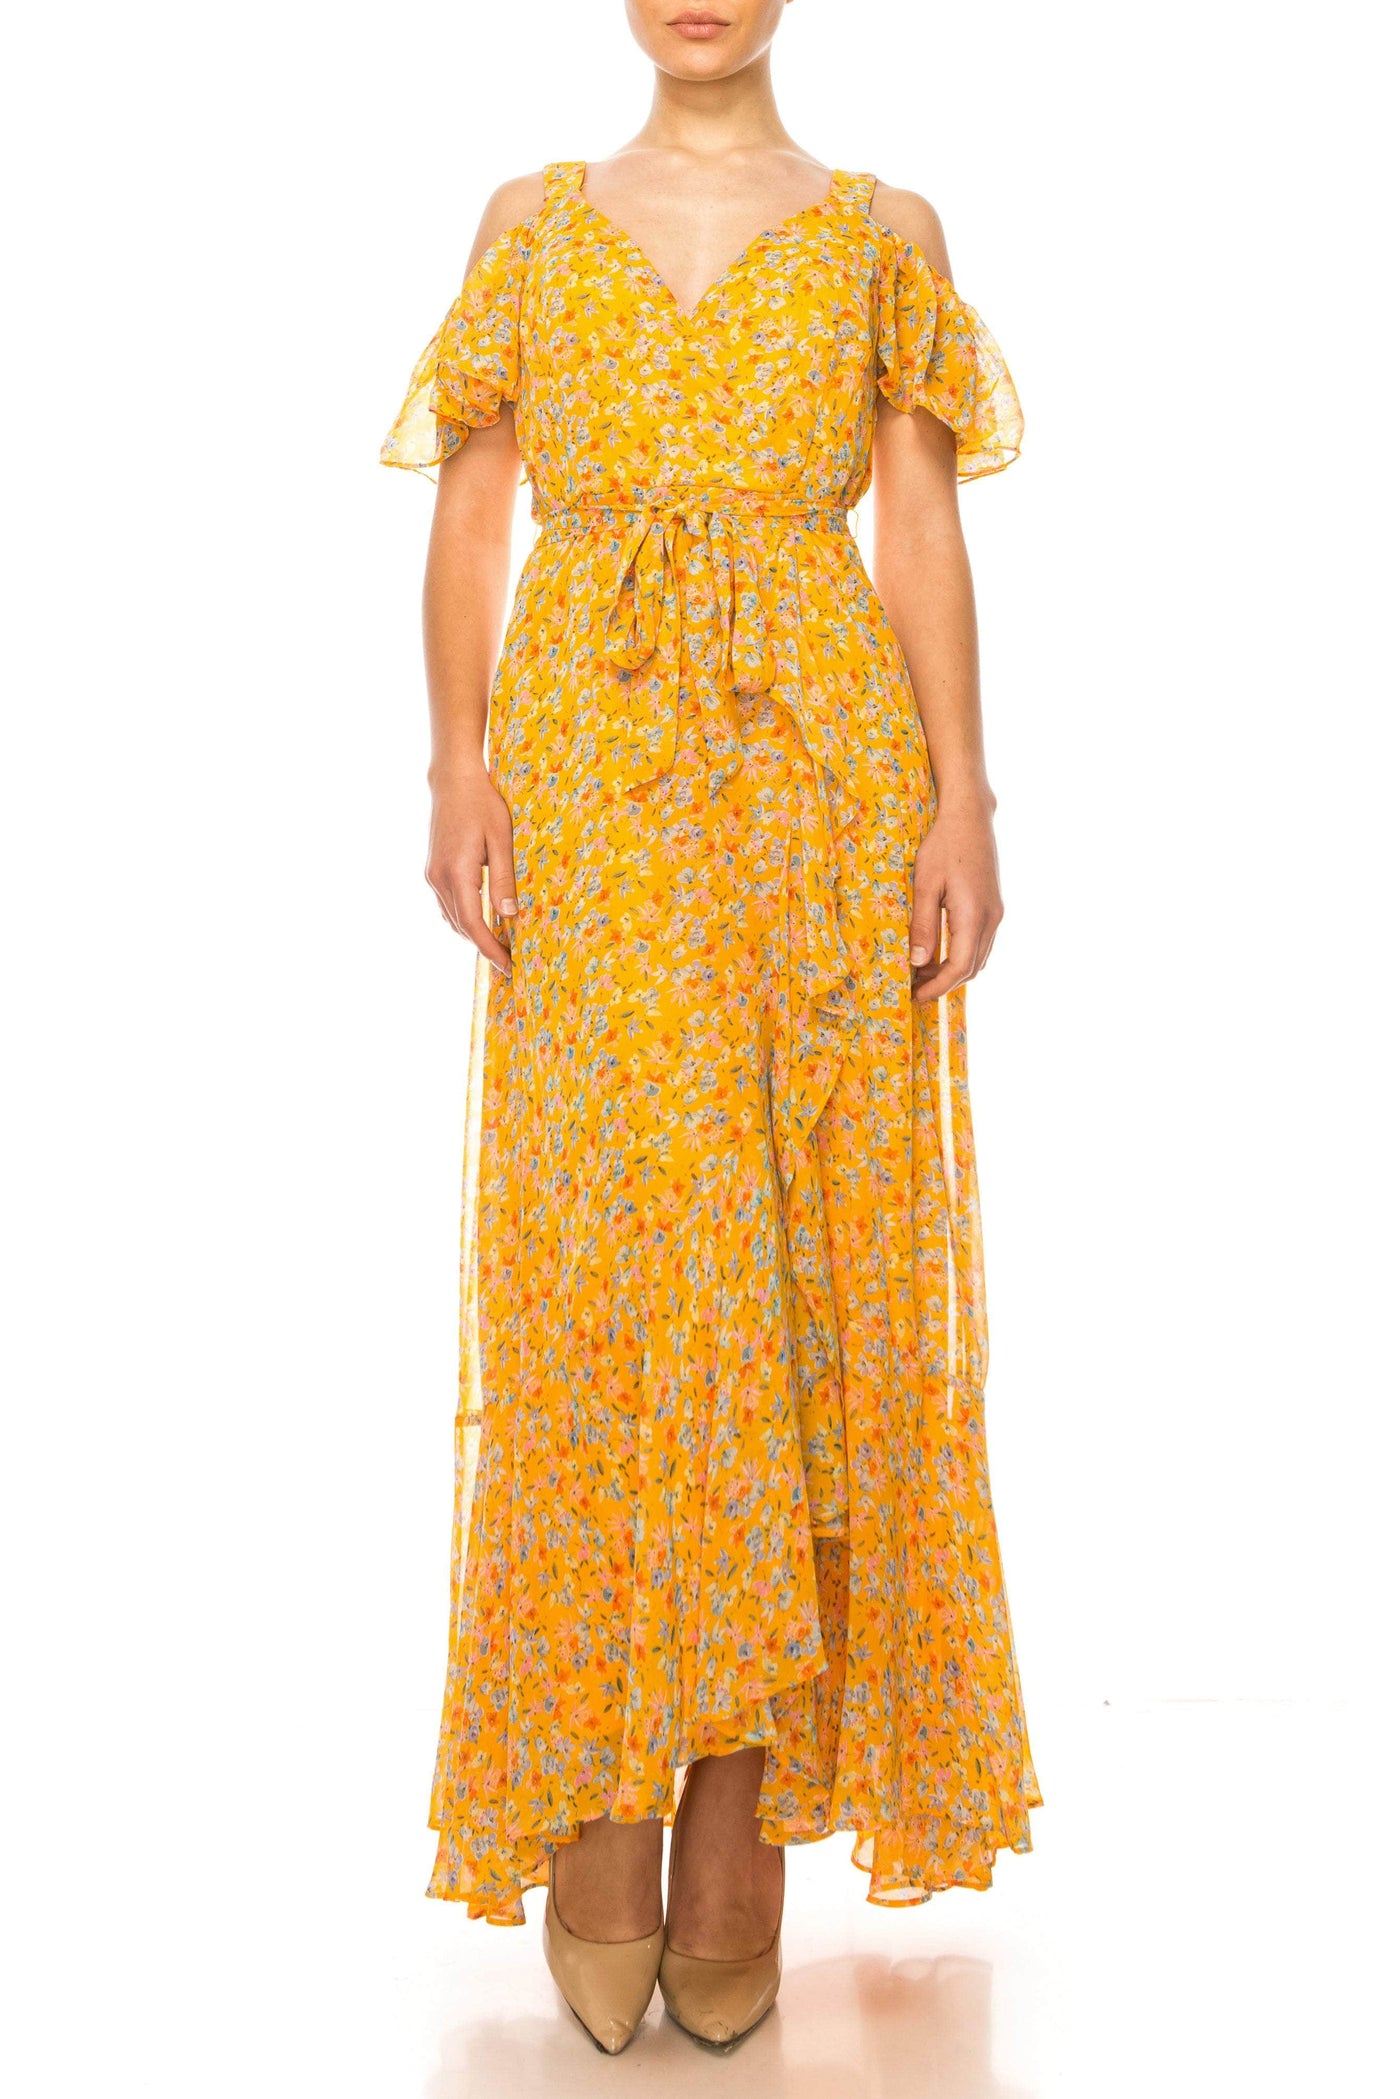 Maison Tara 92034M - Floral Cold Shoulder Dress Special Occasion Dresses